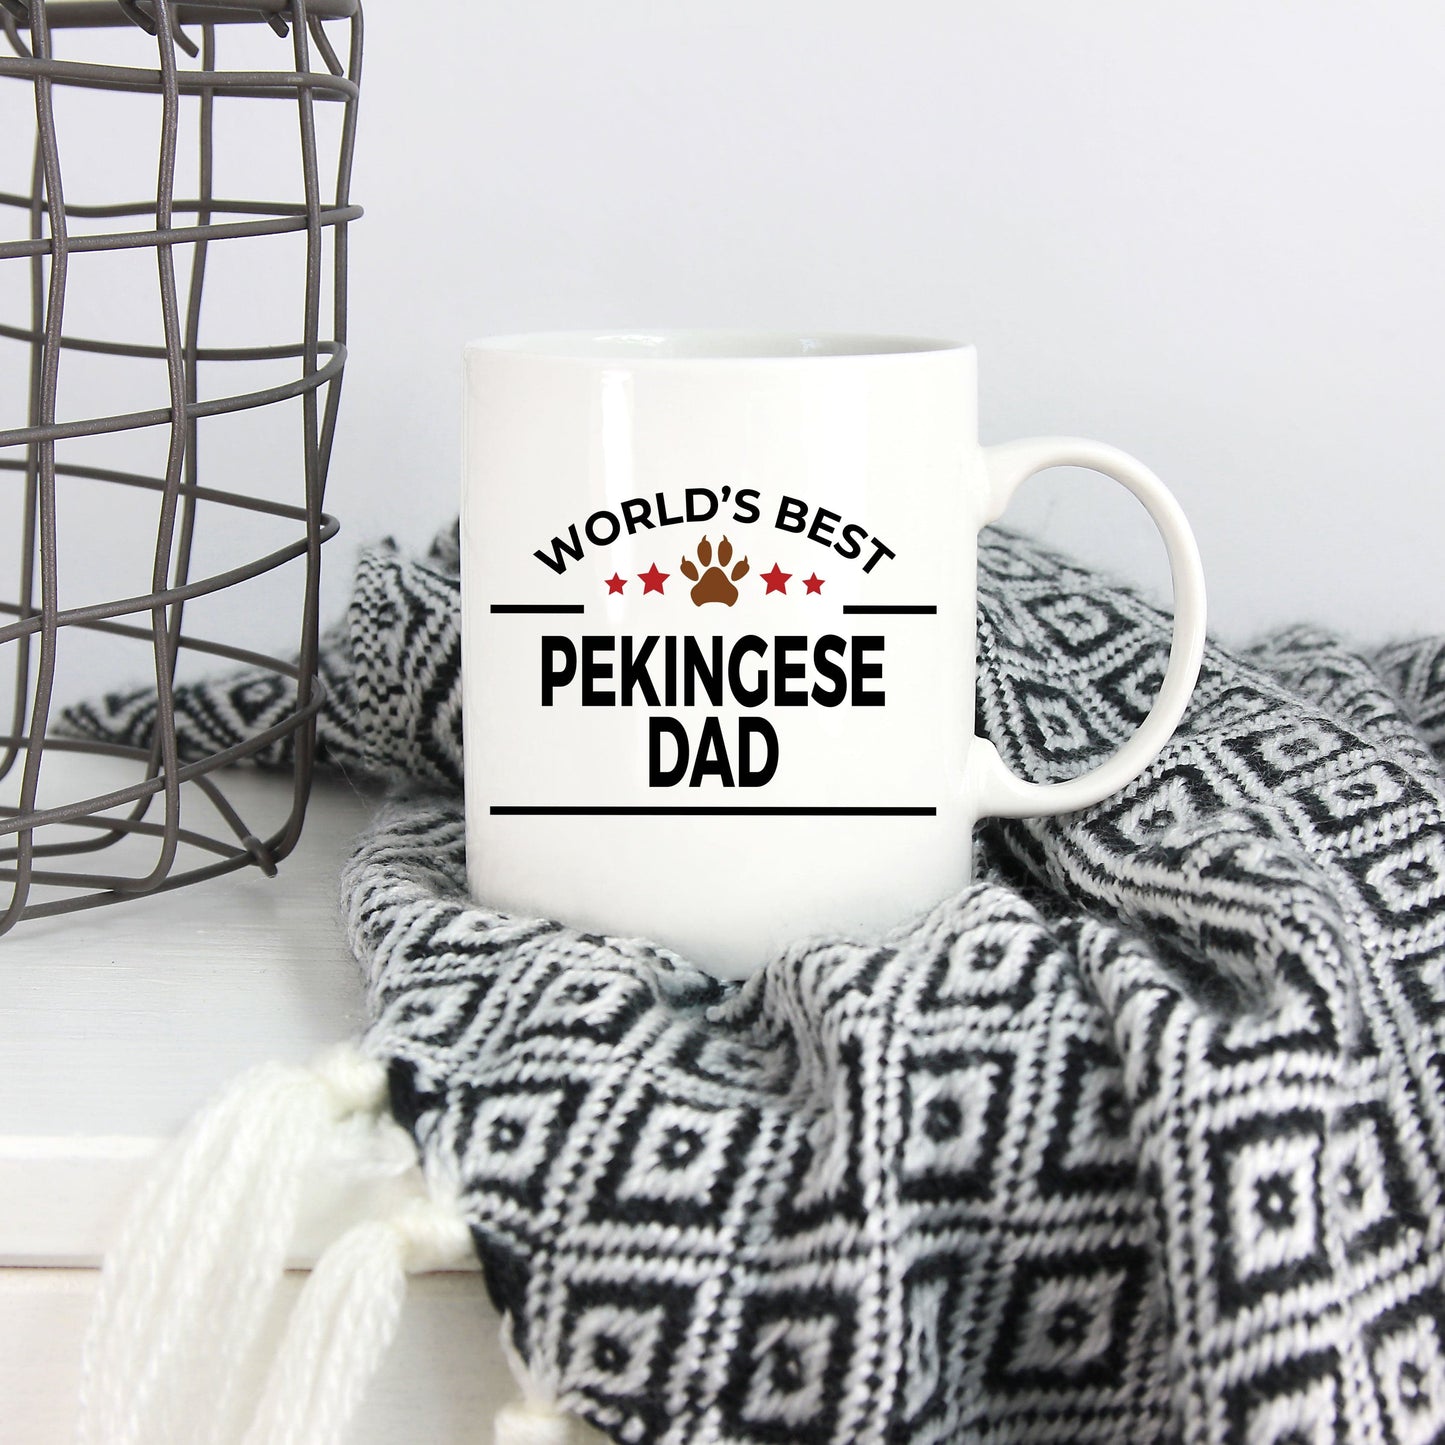 Pekingese Dog Lover Gift World's Best Dad Birthday Father's Day White Ceramic Coffee Mug